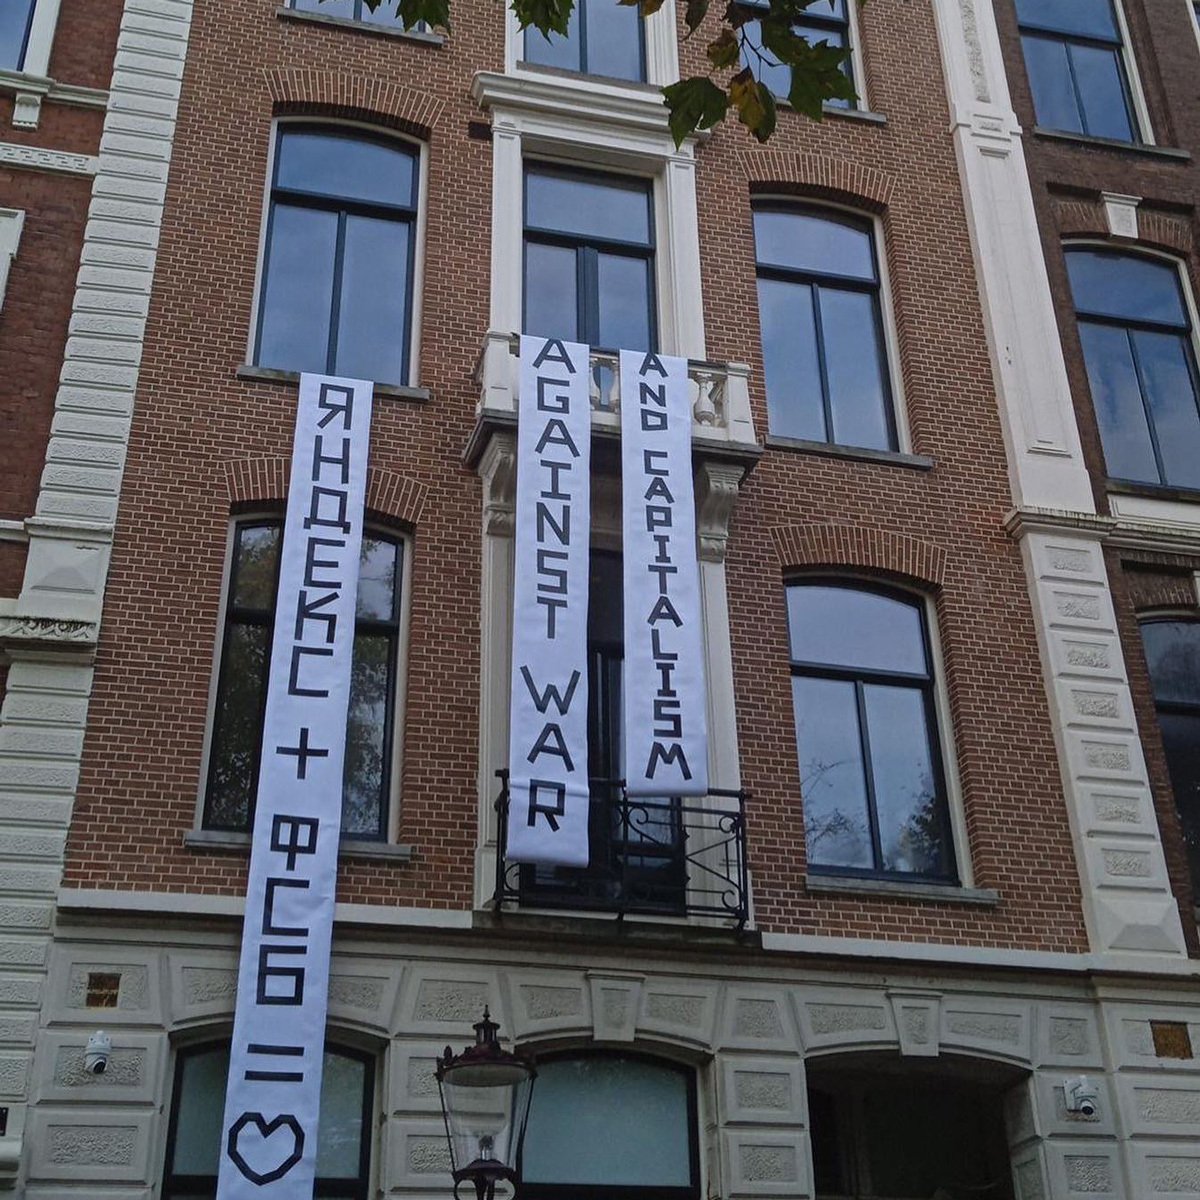 Дом на Vossiusstraat 16 в ноябре 2022 года. Фото:  vossiusstraat16  / Instagram